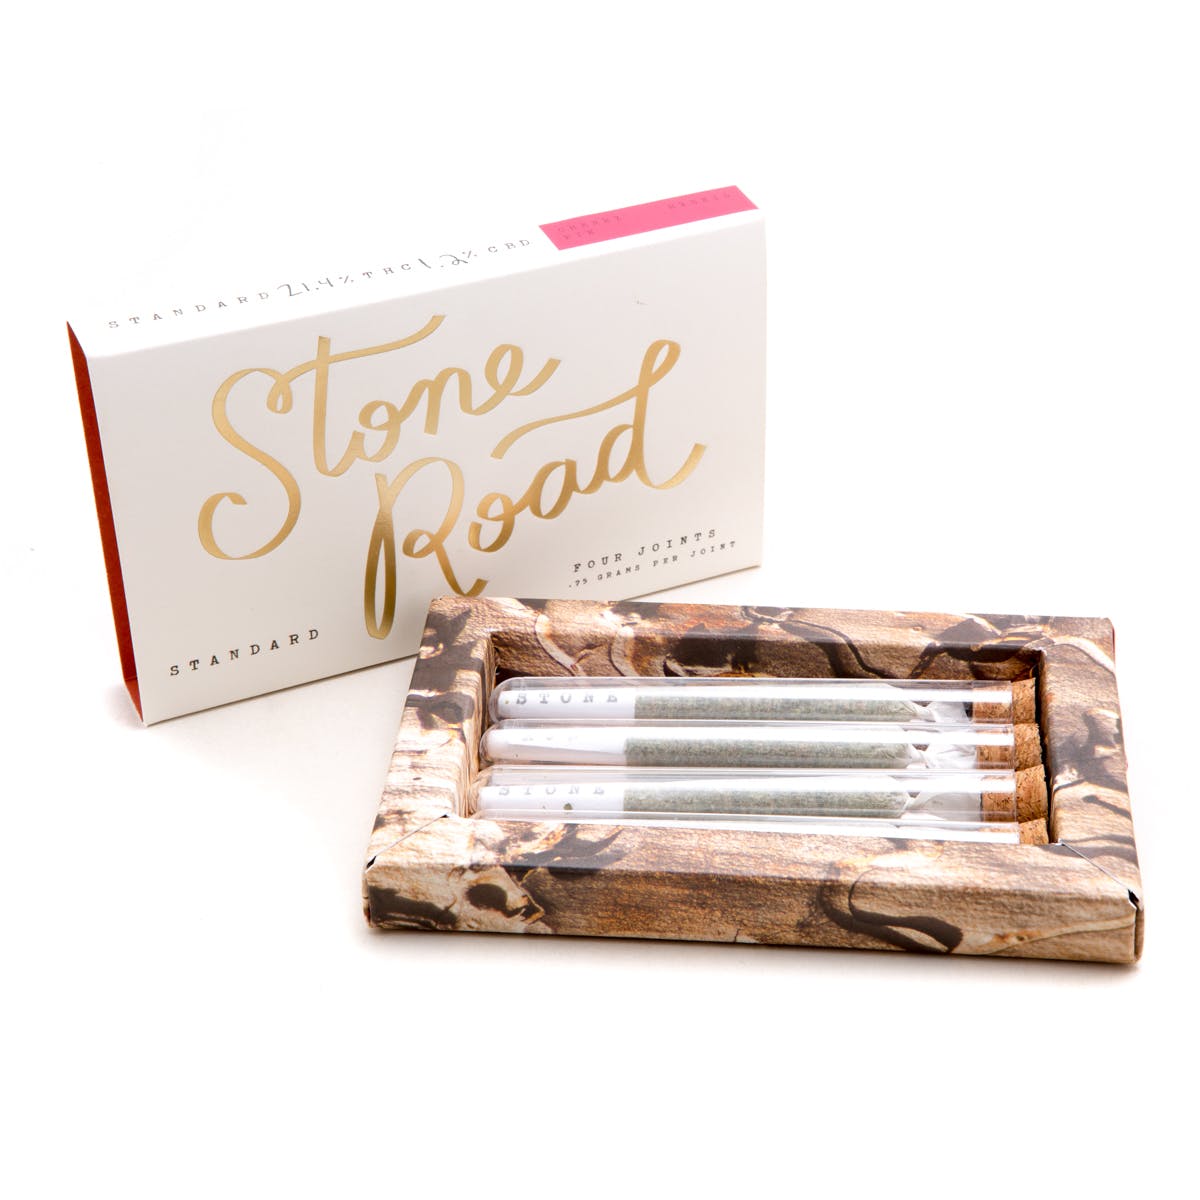 Stone Road - Standard Pack